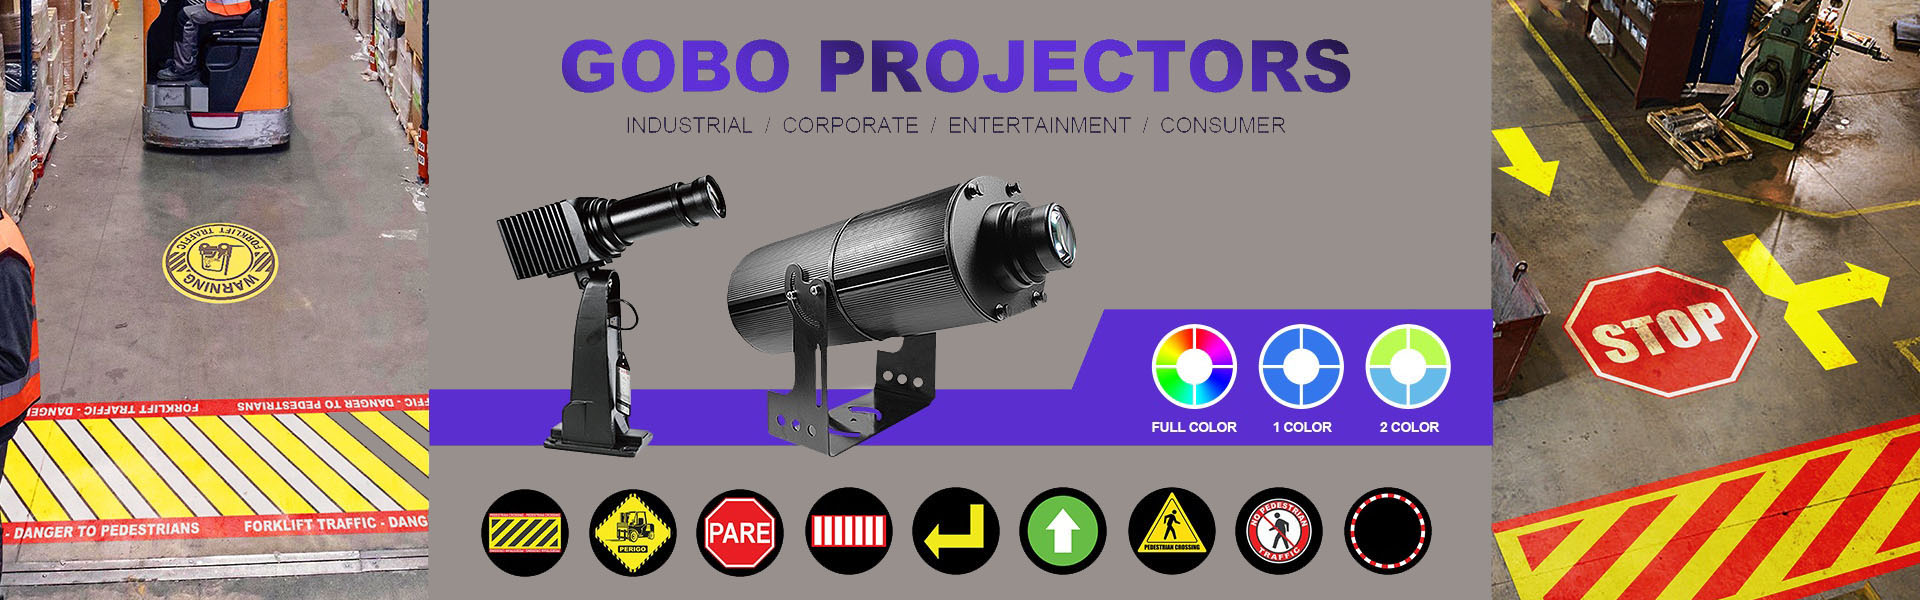 Projetor do logotipo Gobo, LED Light, LED Light Light,Wetech Electronic Technology Limited